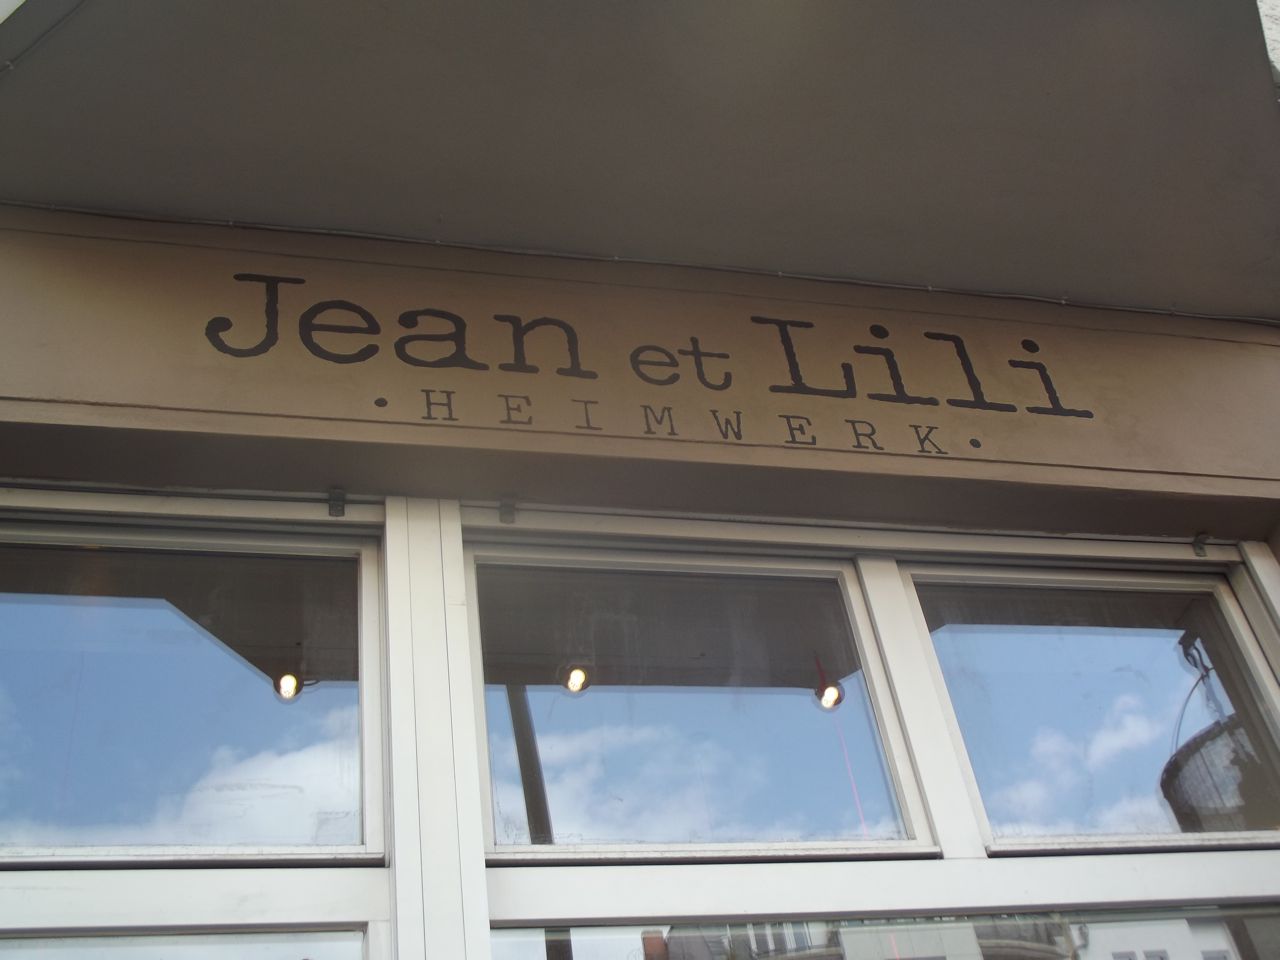 <!--:en-->Jean et Lili Heimwerk!!!!!The Homewear Shop for that little something special!!!!<!--:-->